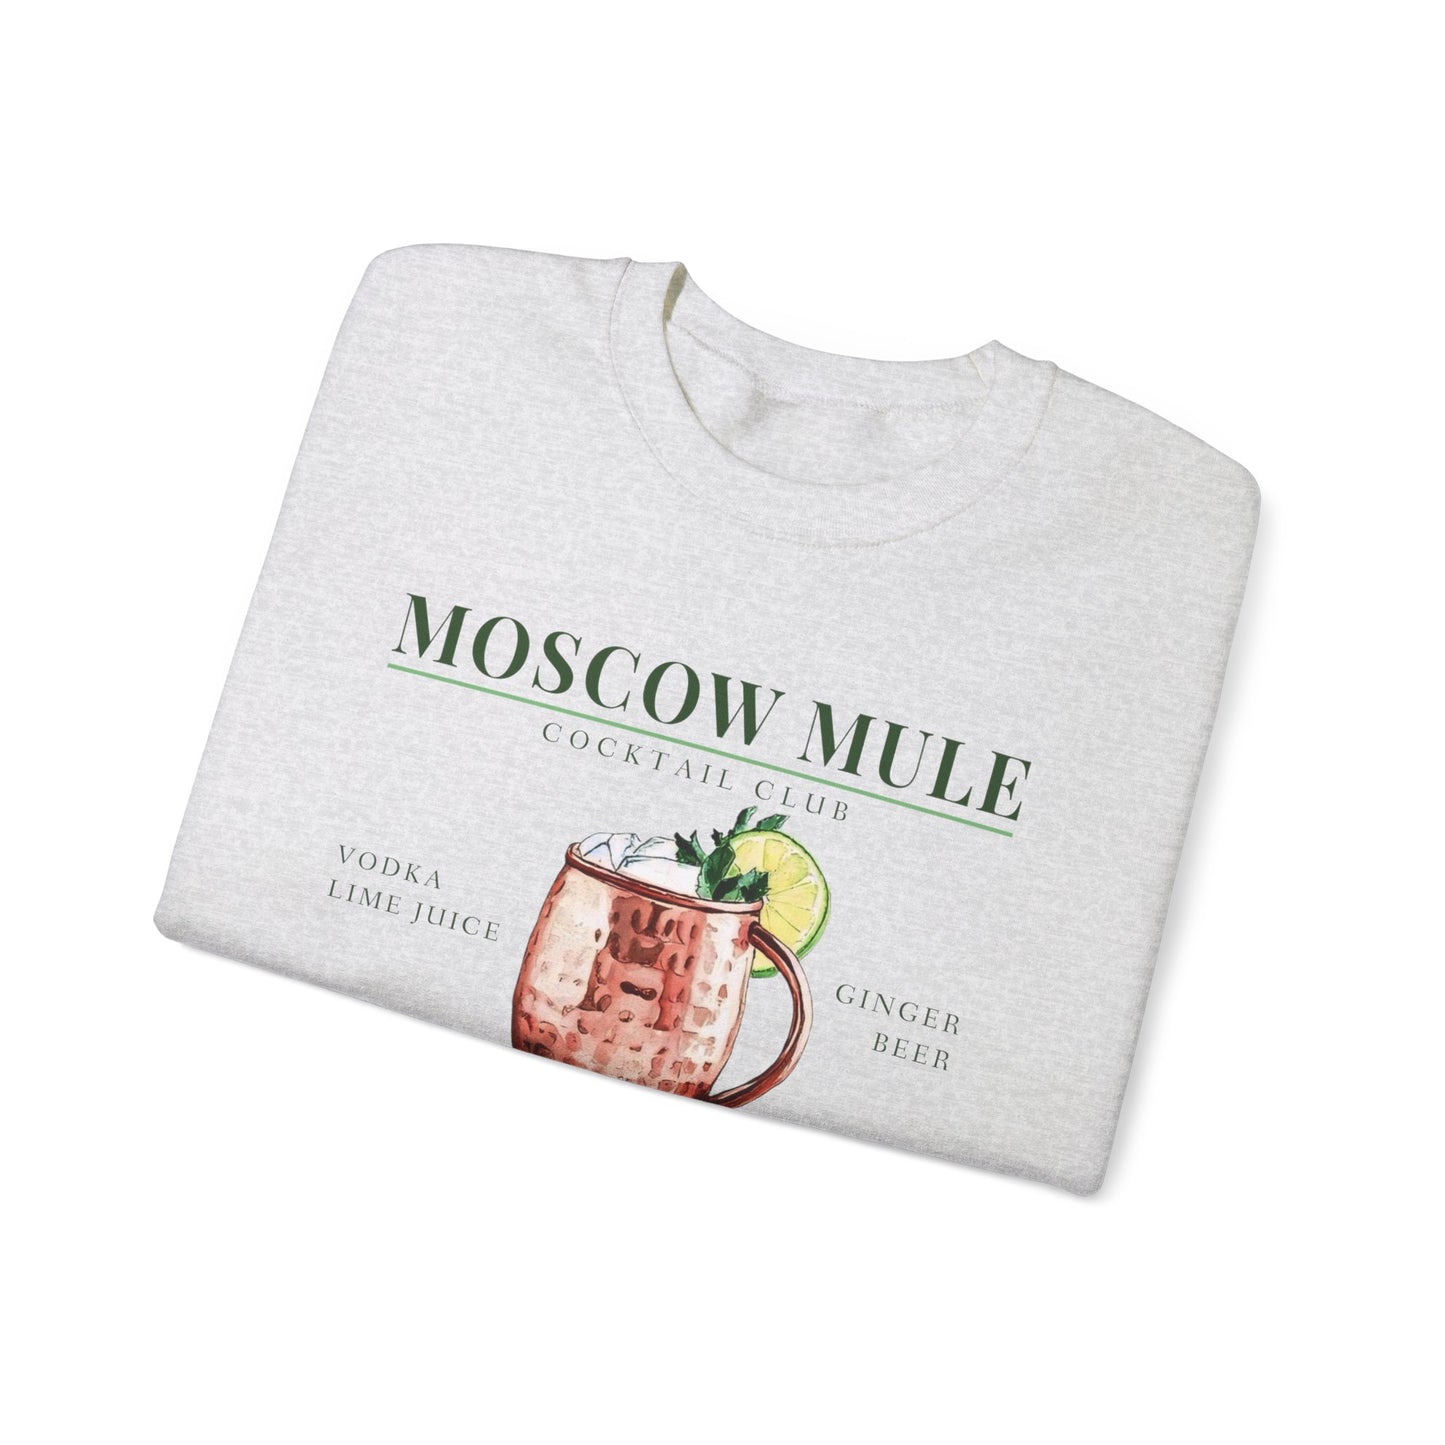 Moscow Mule Cocktail Club Sweatshirt